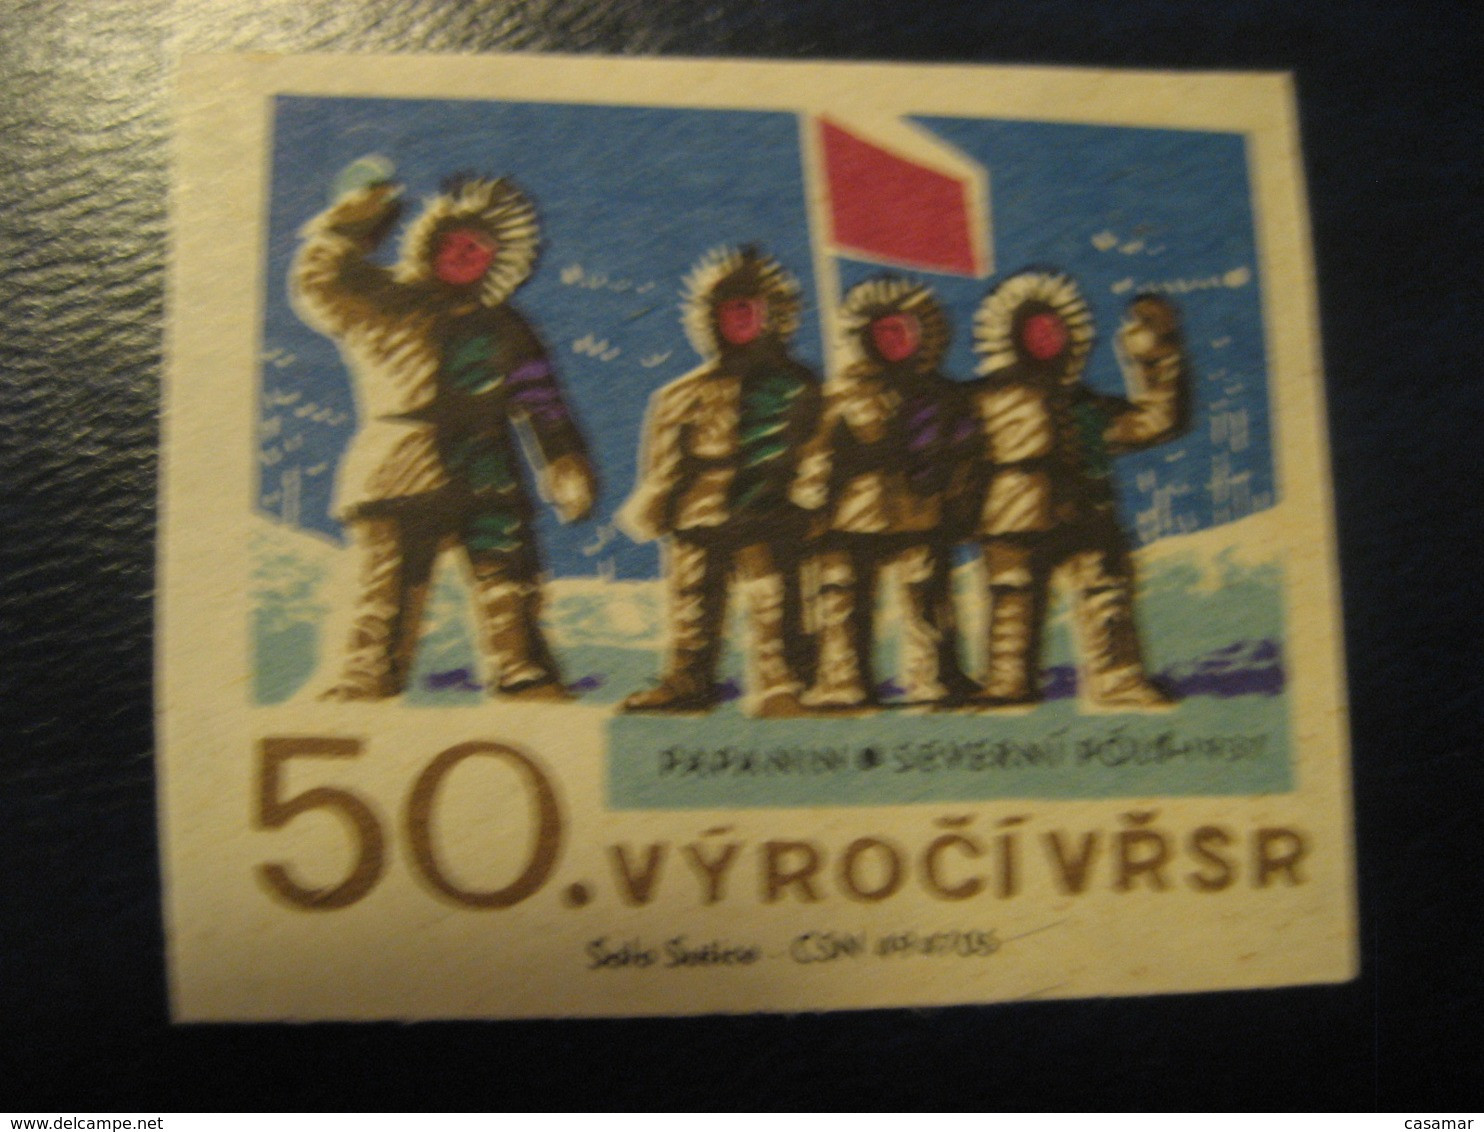 PAPUNIN 1937 North Pole Expedition Polar Arctic Poster Stamp Vignette CZECHOSLOVAKIA Label - Expediciones árticas